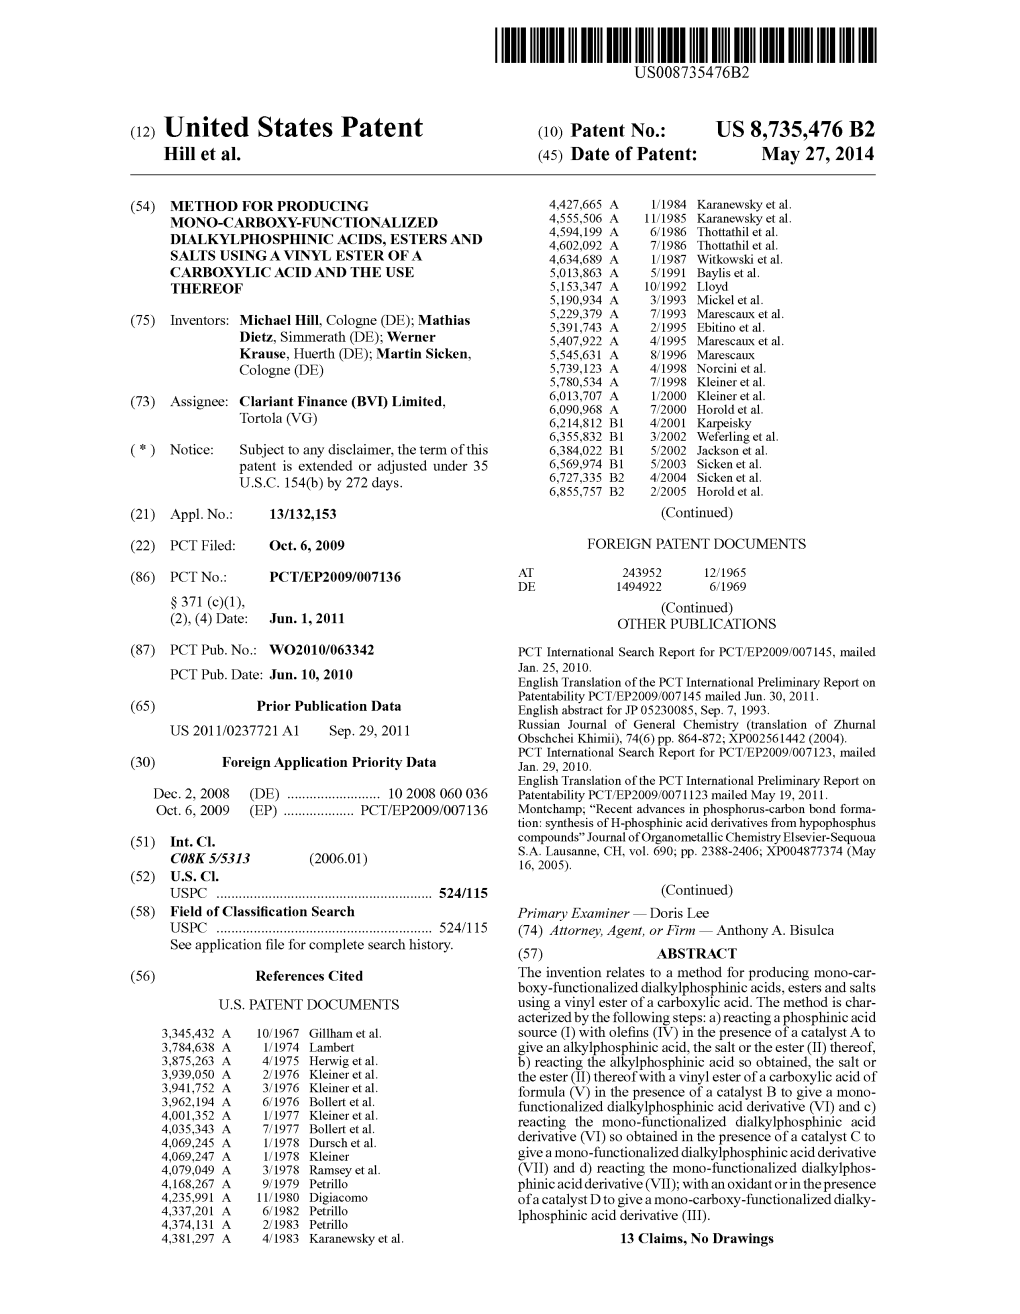 (12) United States Patent (10) Patent No.: US 8,735,476 B2 Hill Et Al